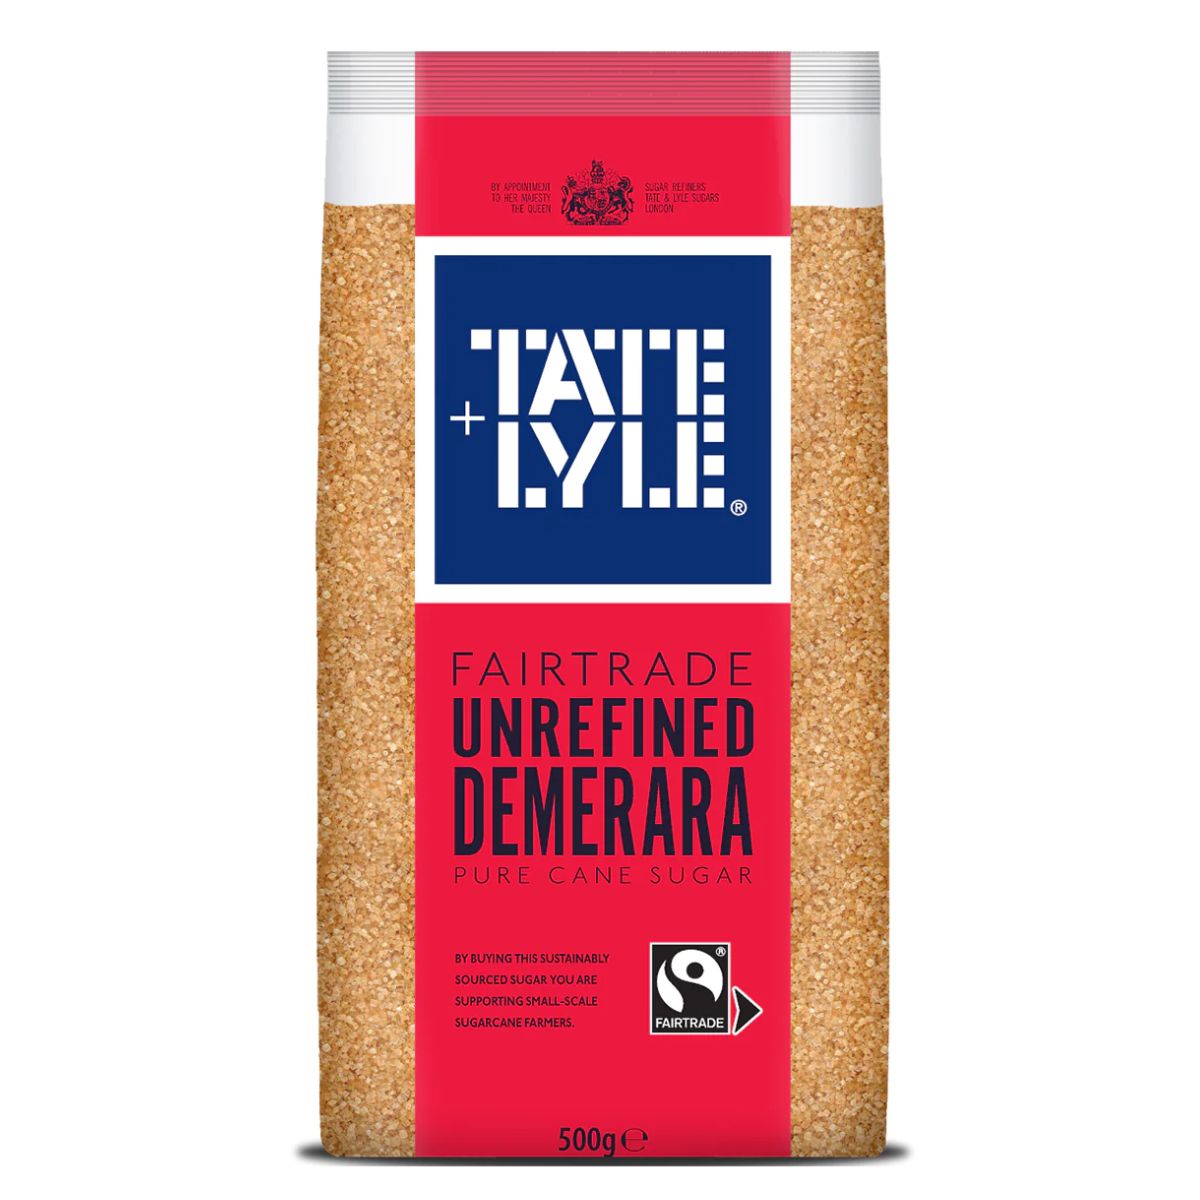 A package of Tate & Lyle - Fairtrade Unrefined Demerara - 500g.